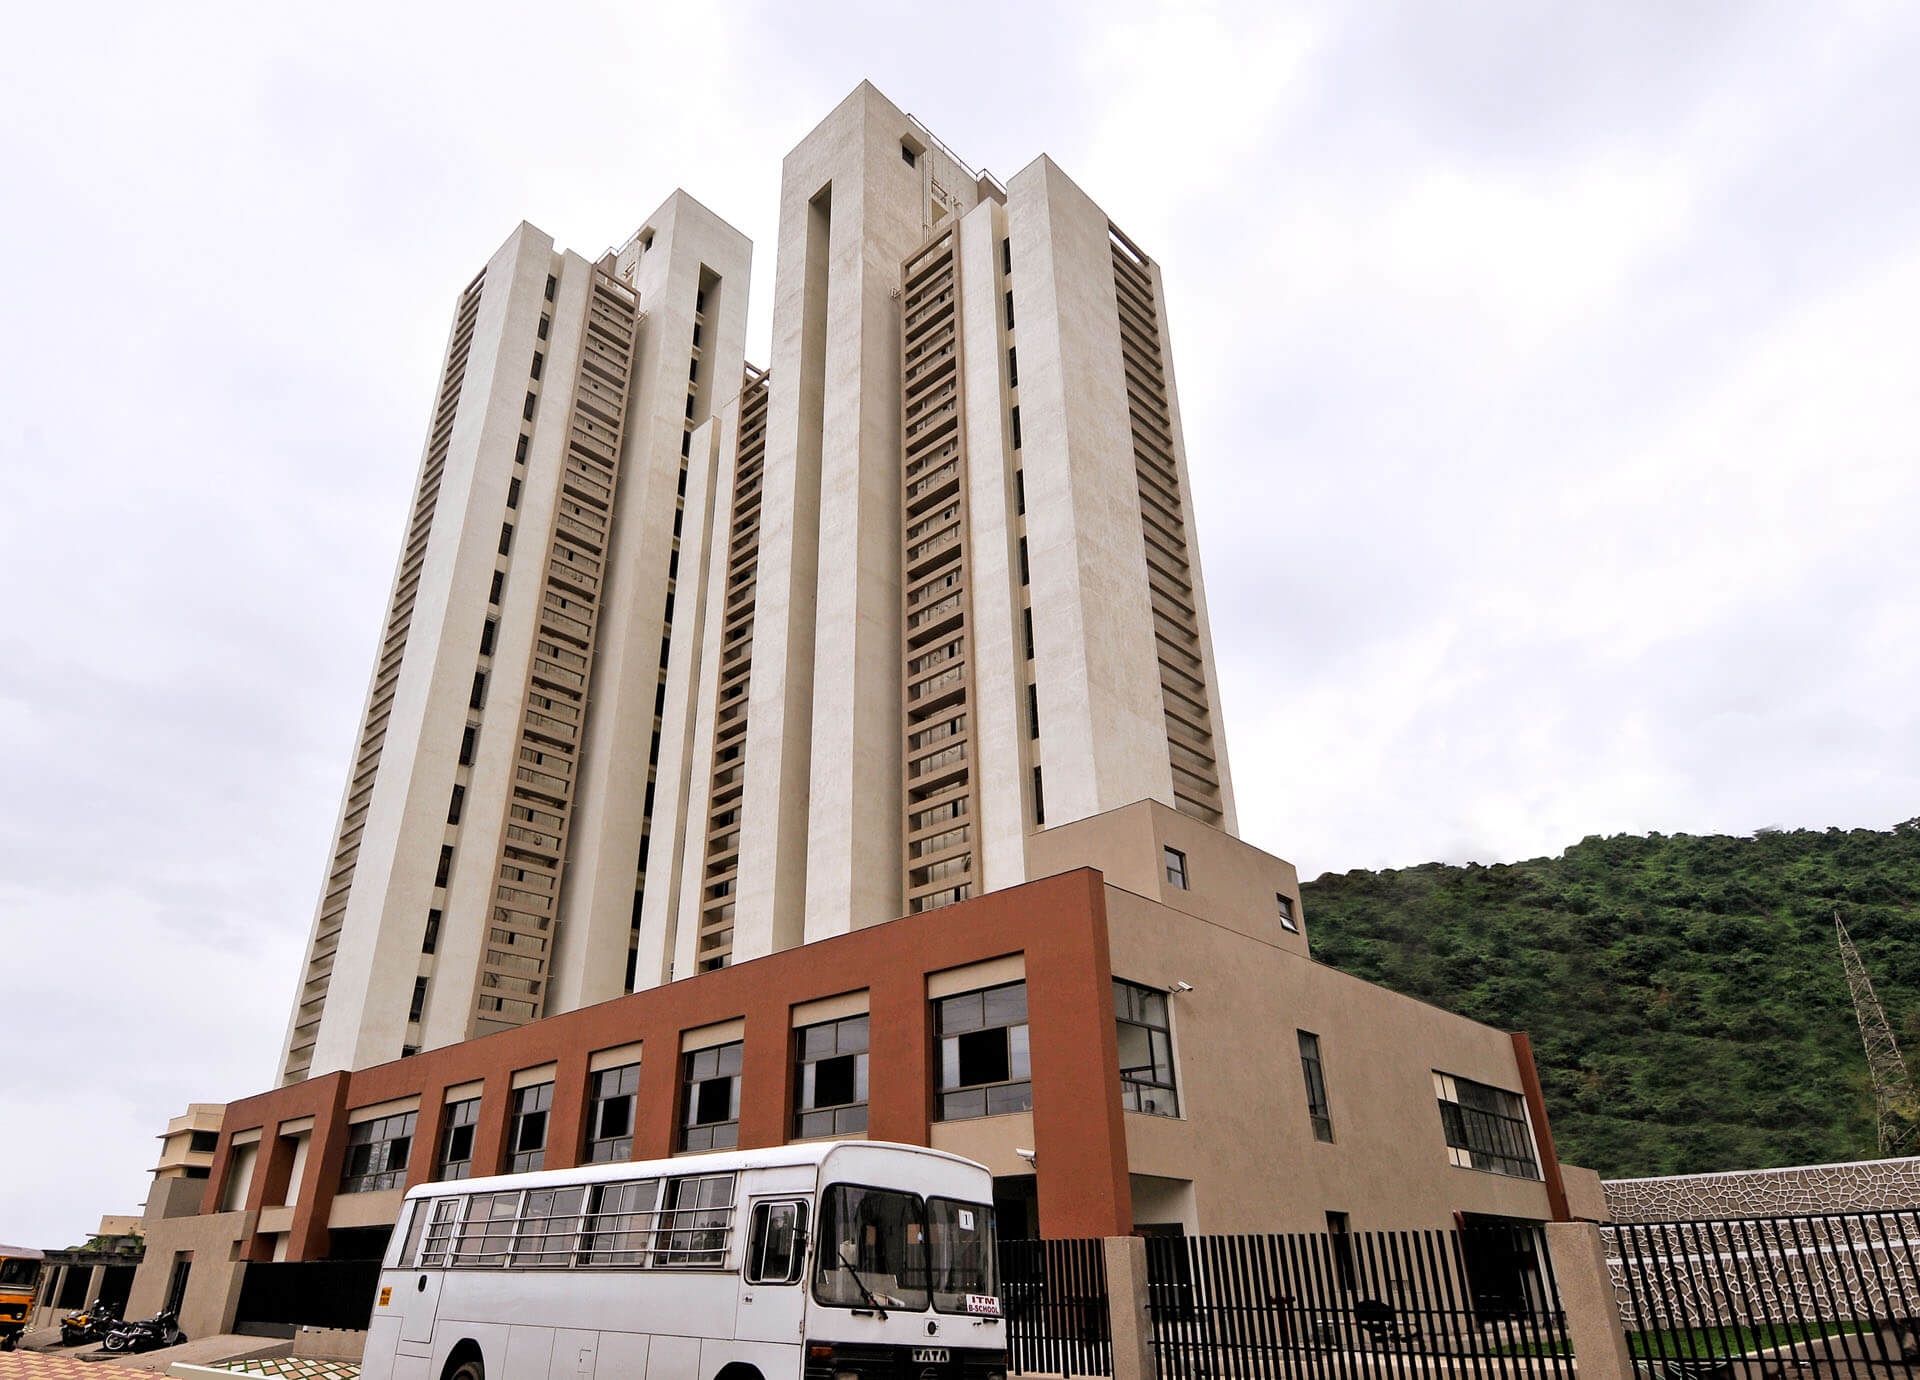 MBA Hostel Building- ITM- Navi Mumbai- India (5) (1)